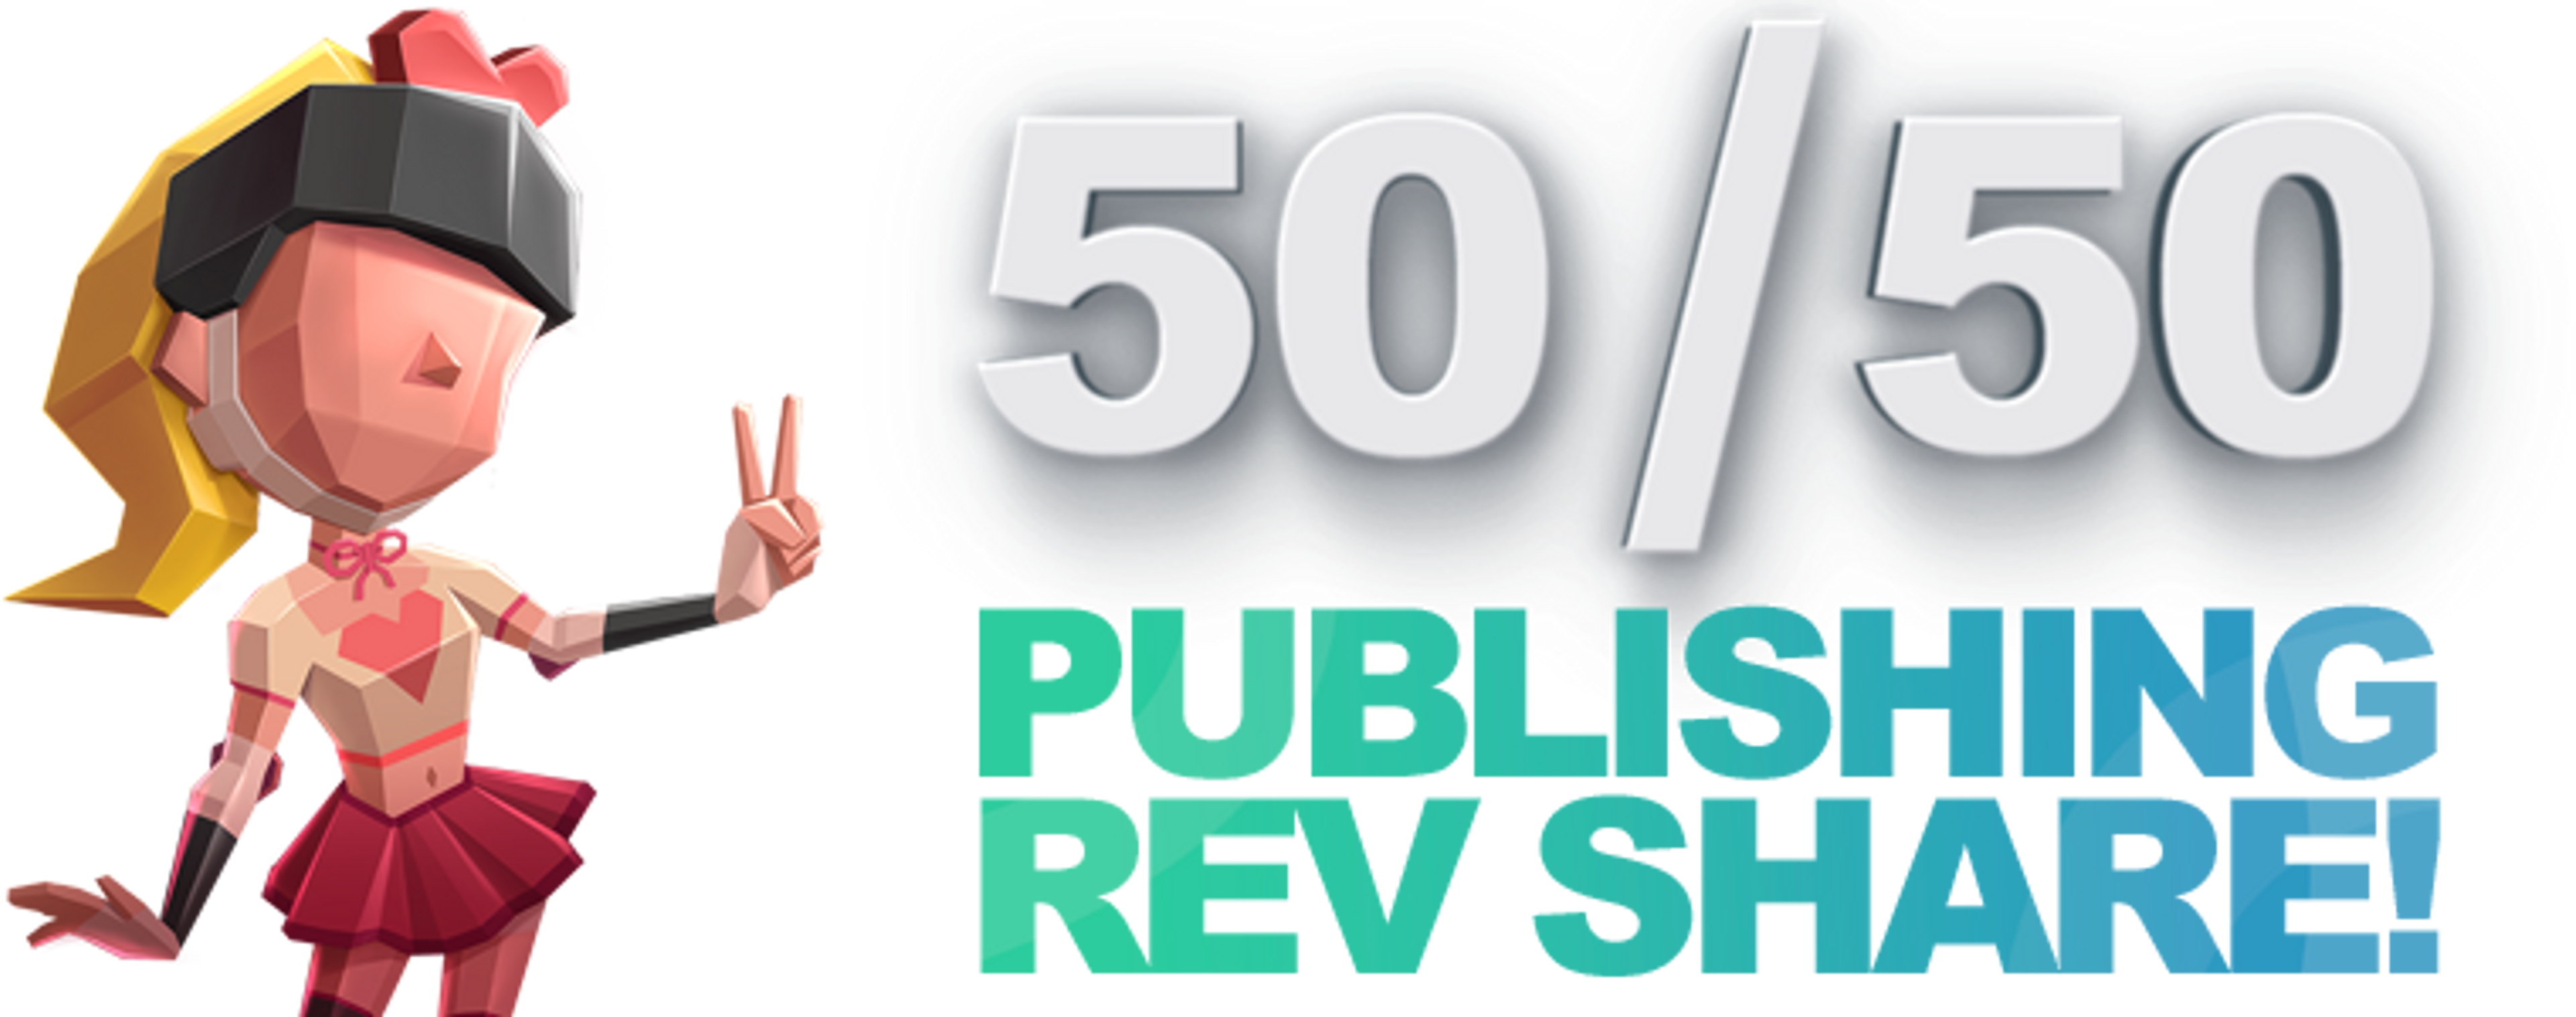 Win 50% of publishing revenue share.